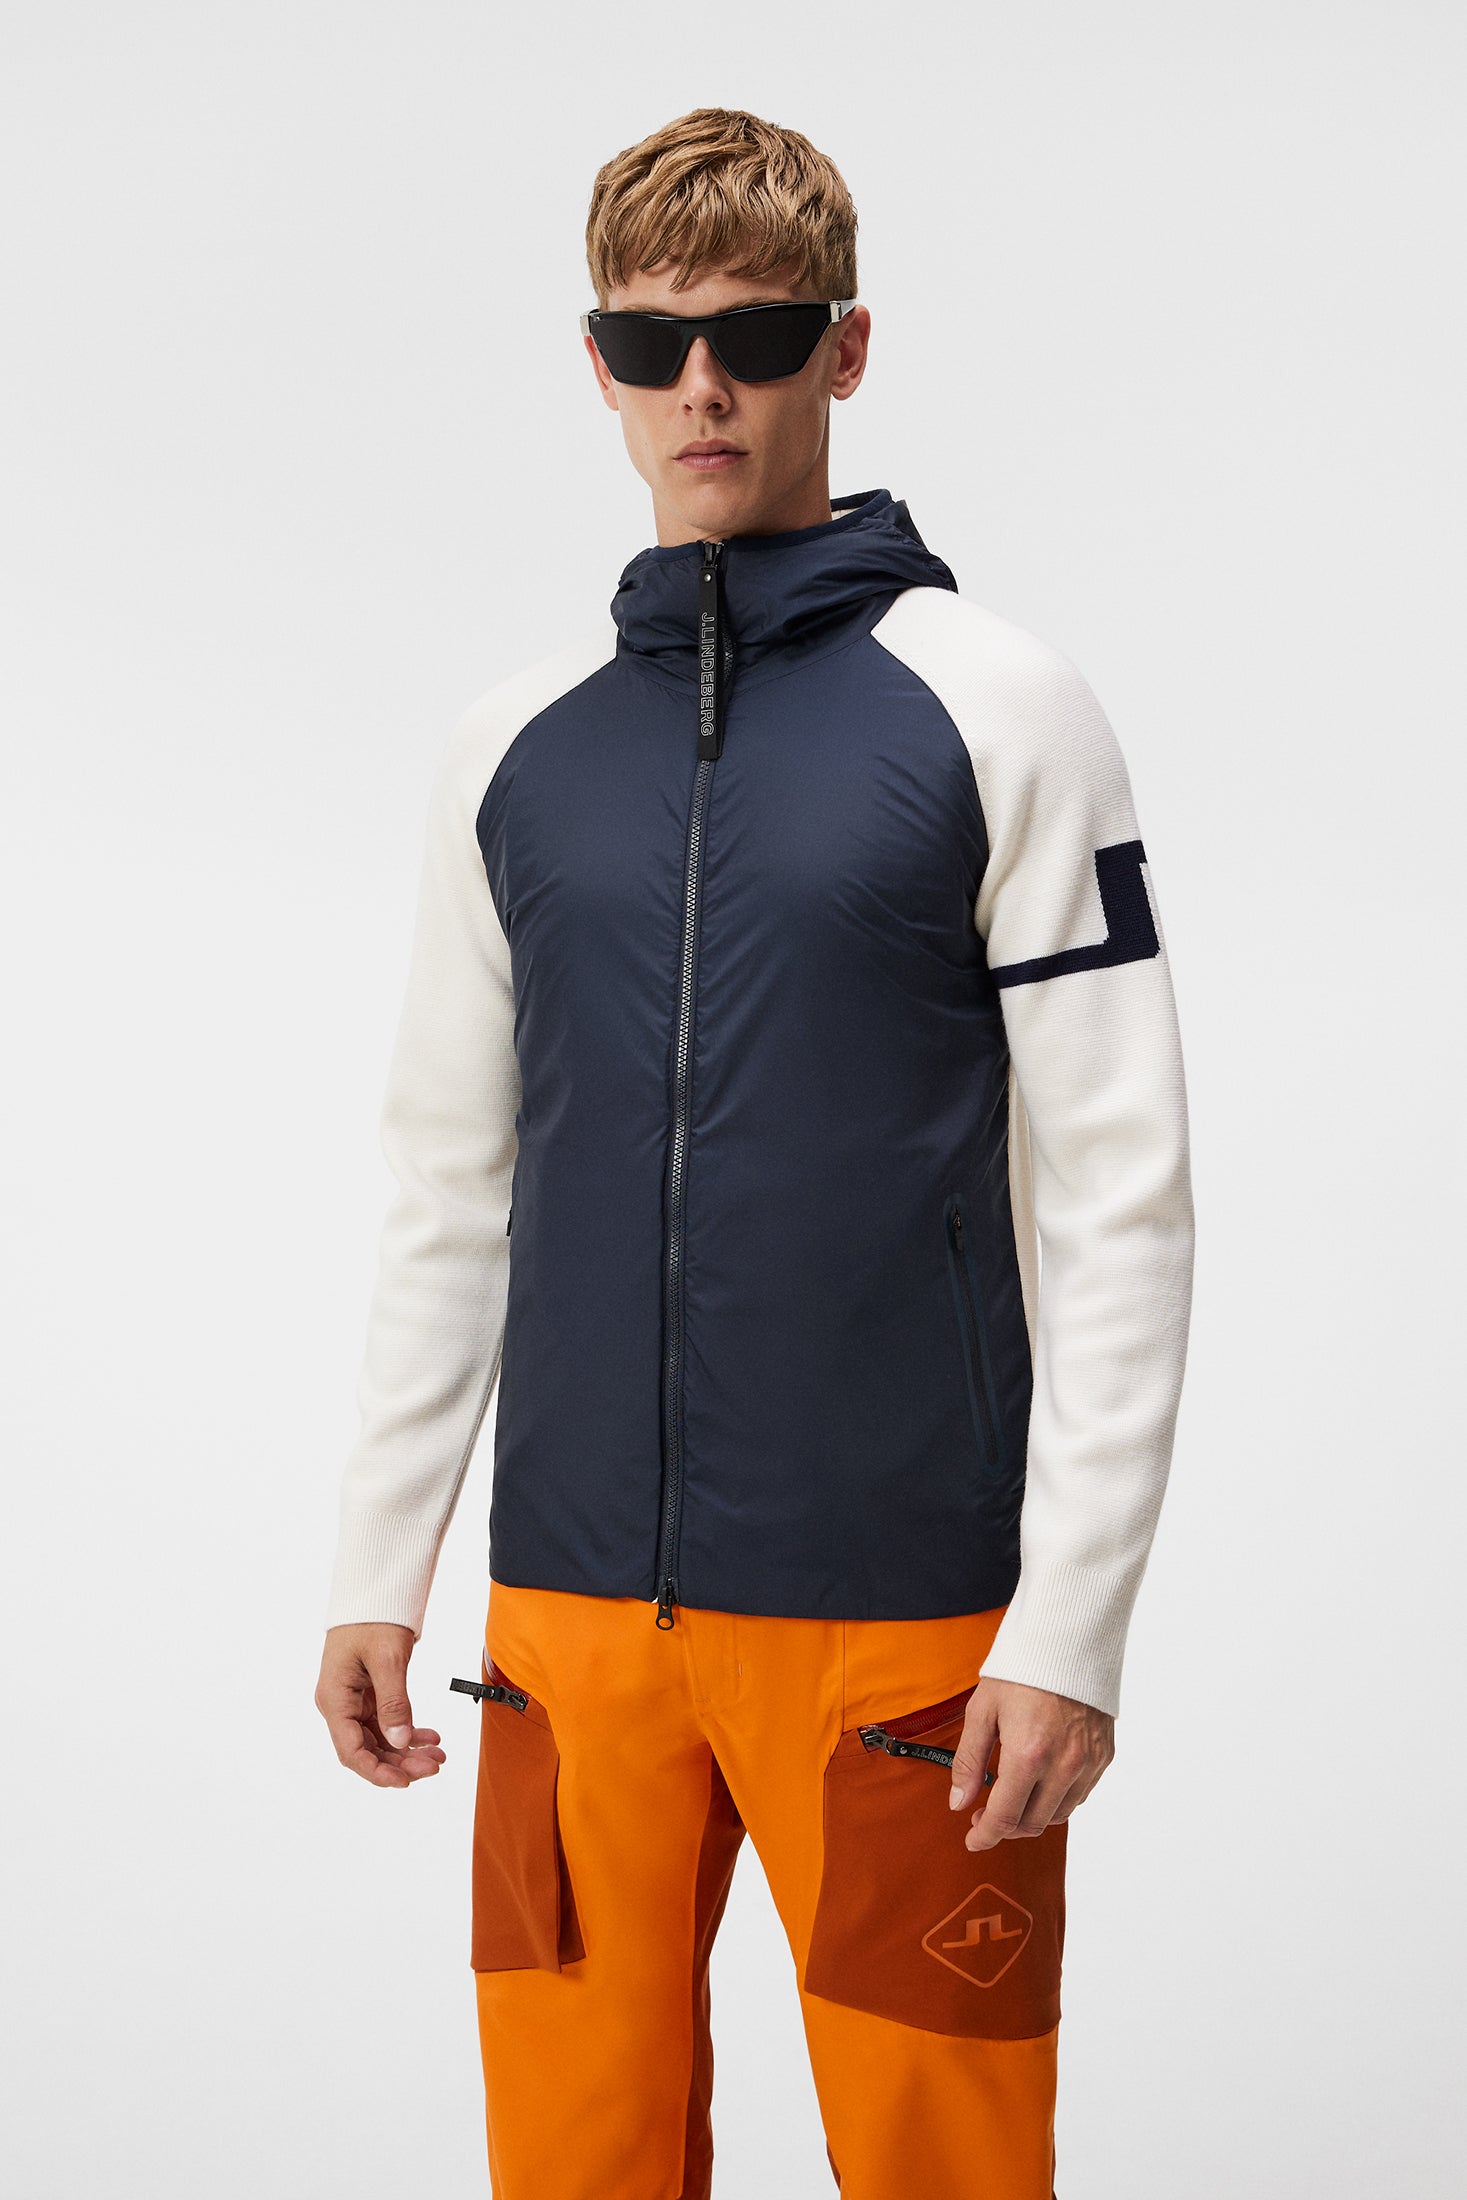 Men's ski outerwear – J.Lindeberg